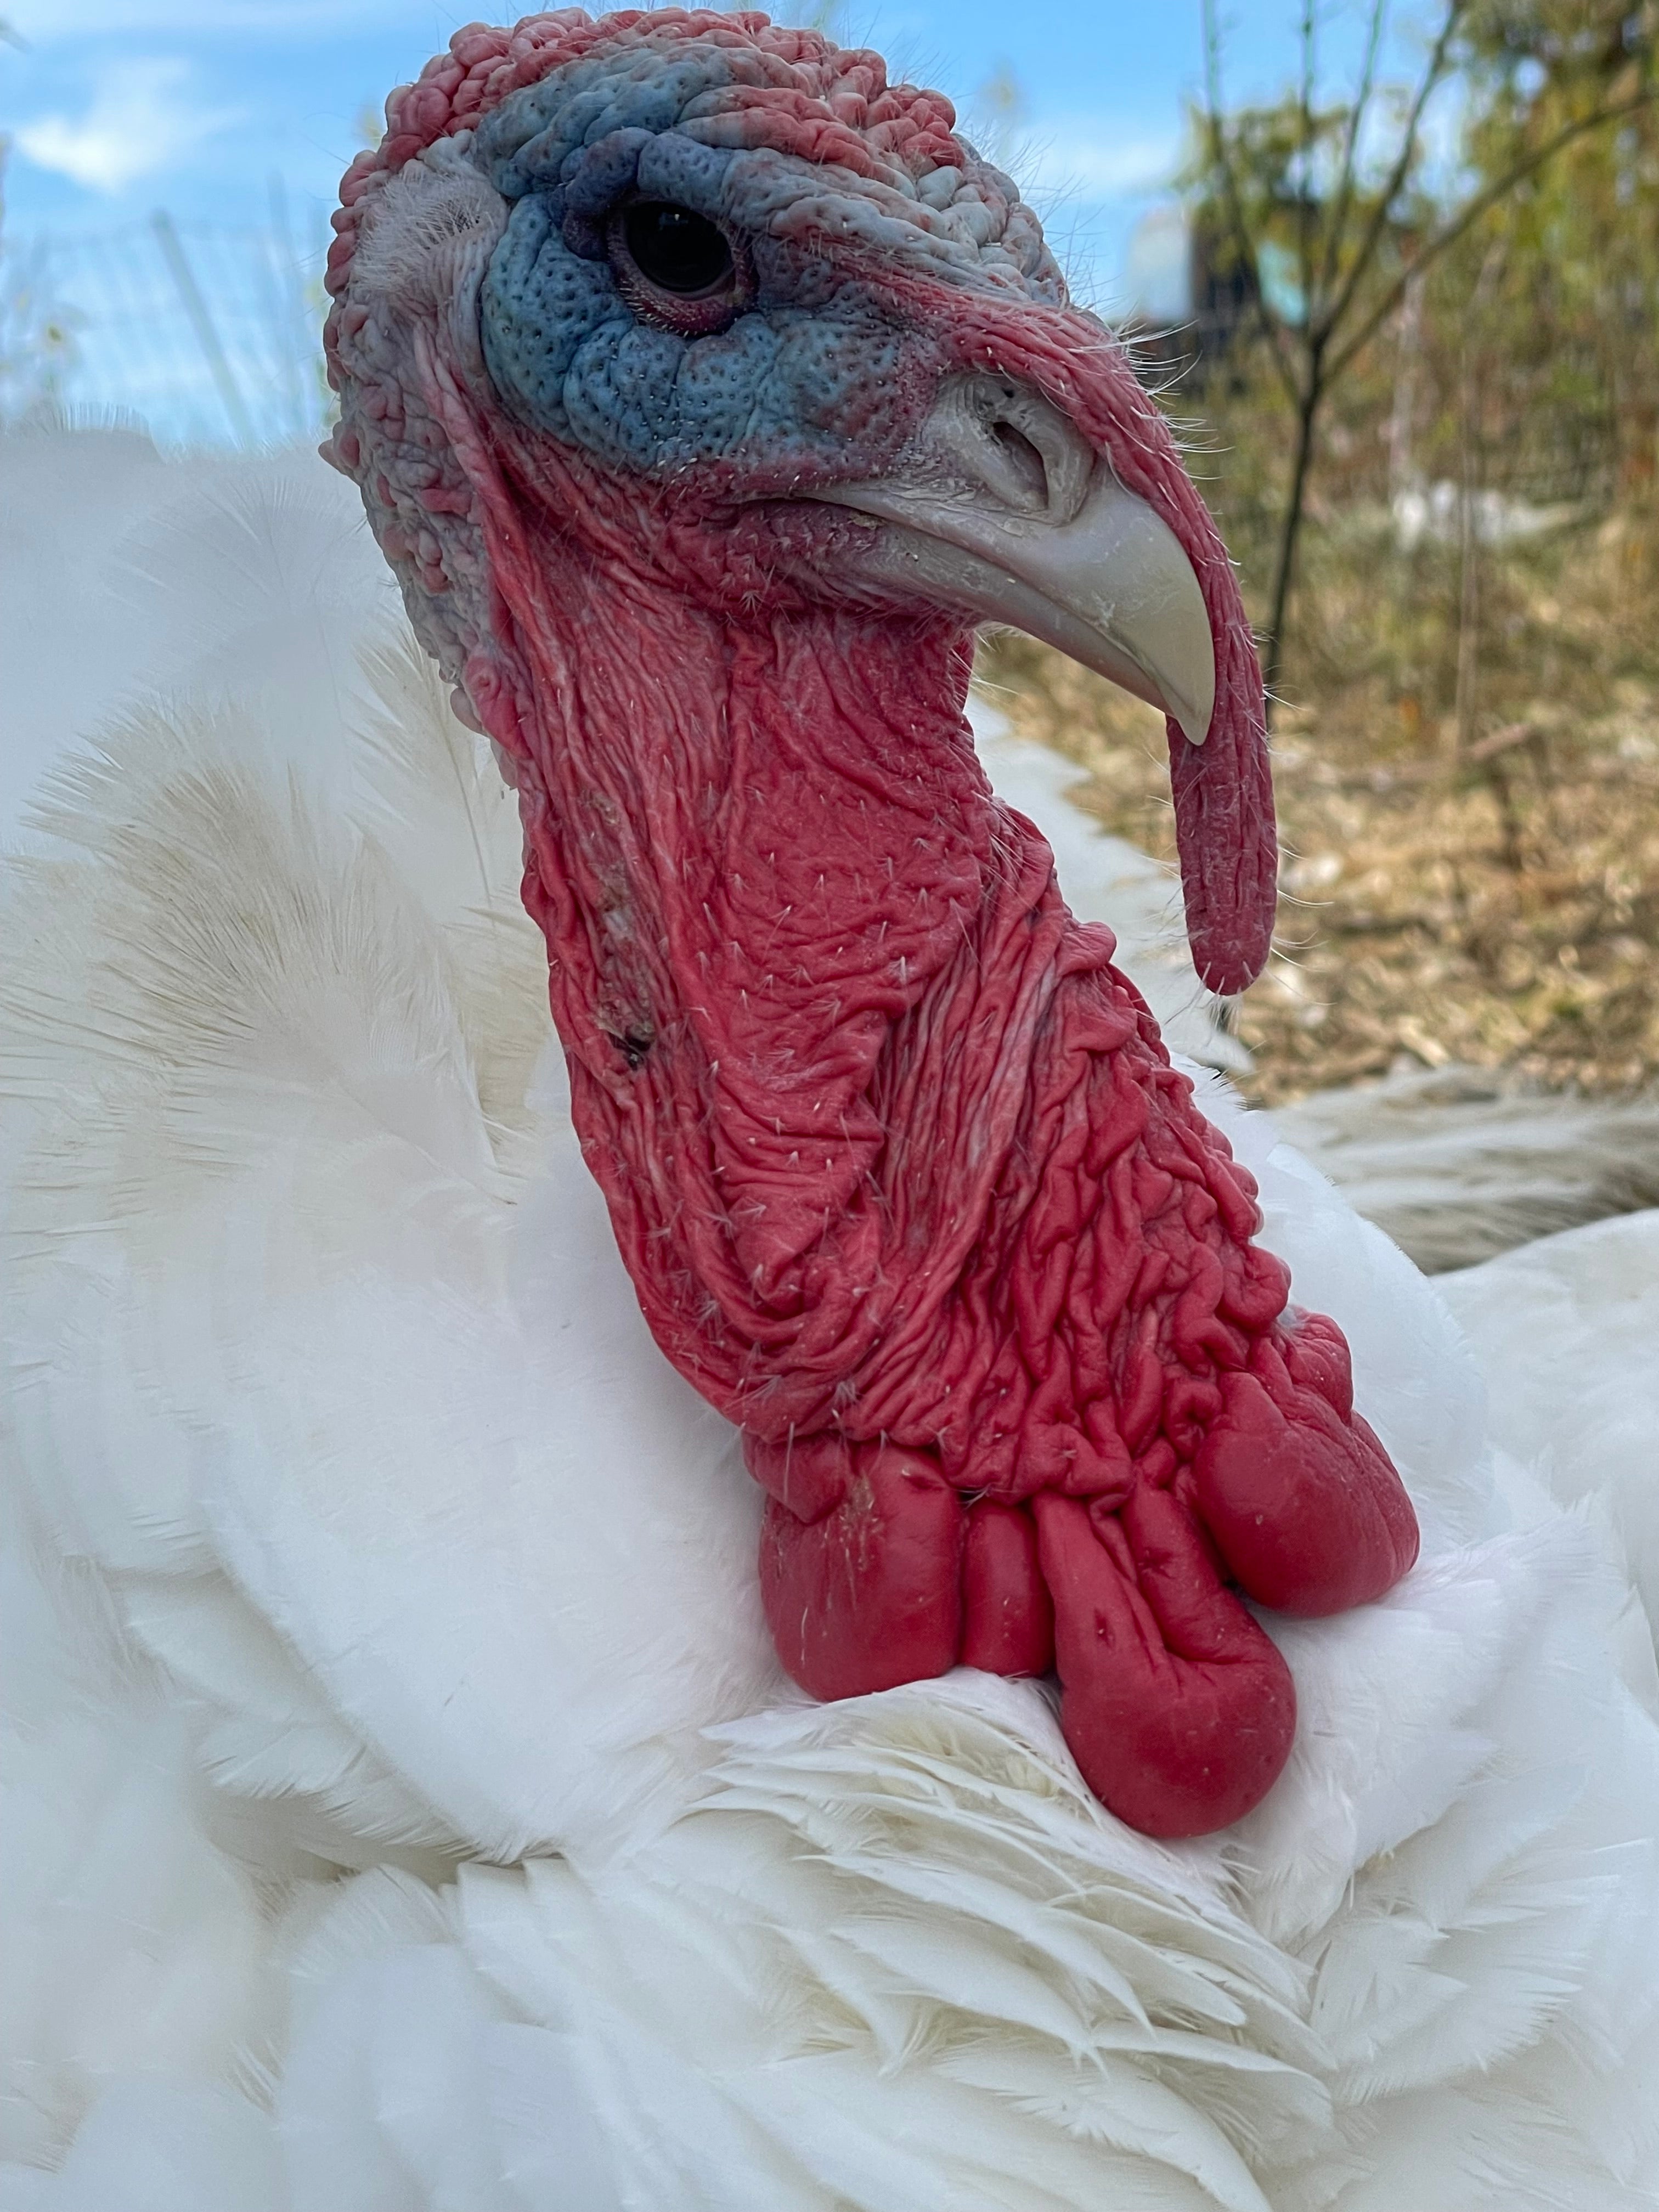 Why Pasture Raised Turkeys are Better